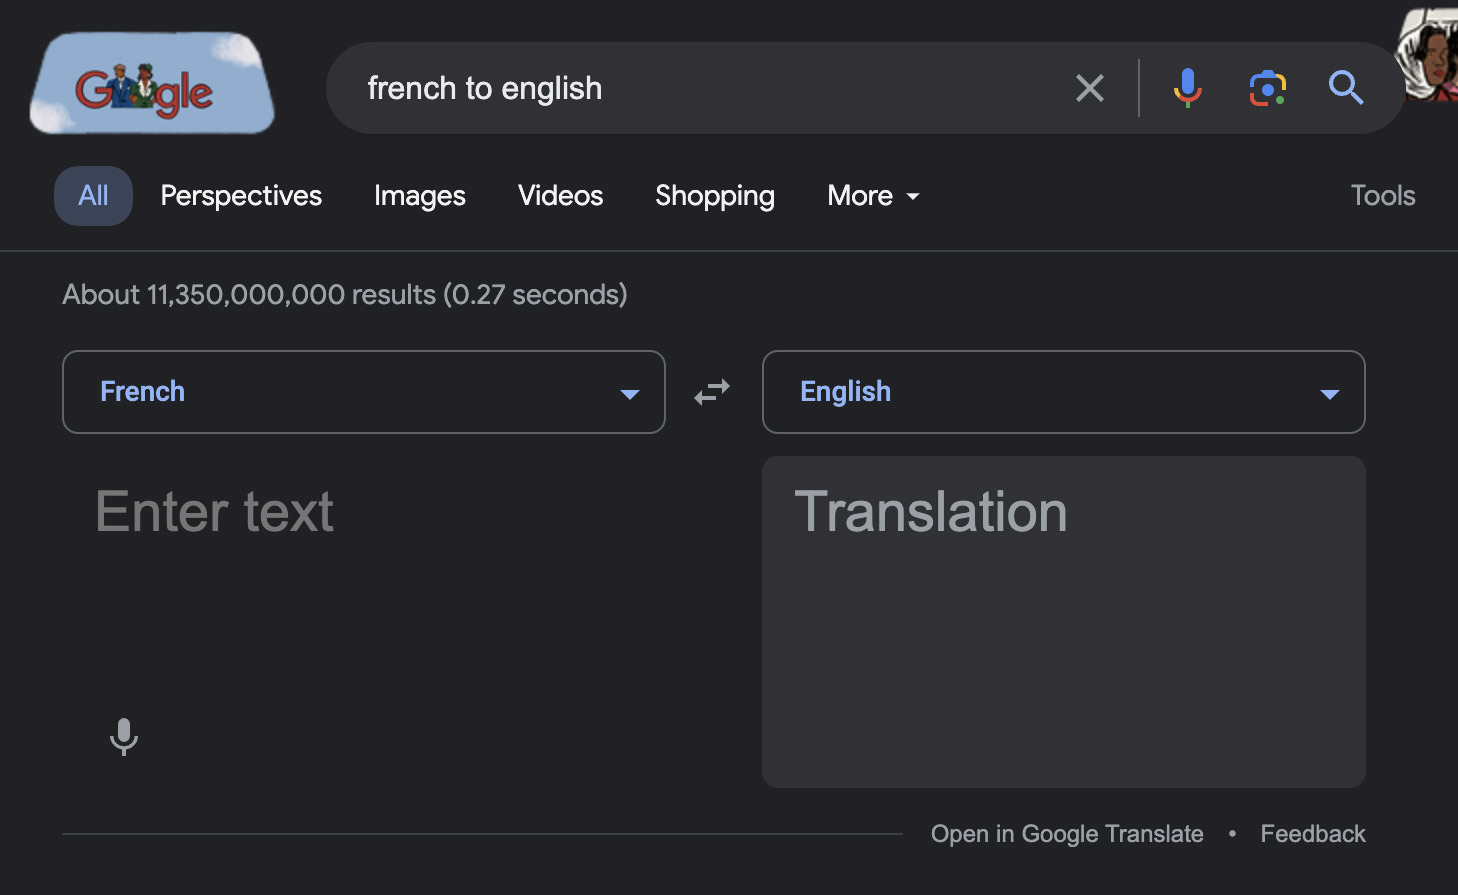 Translation between Languages